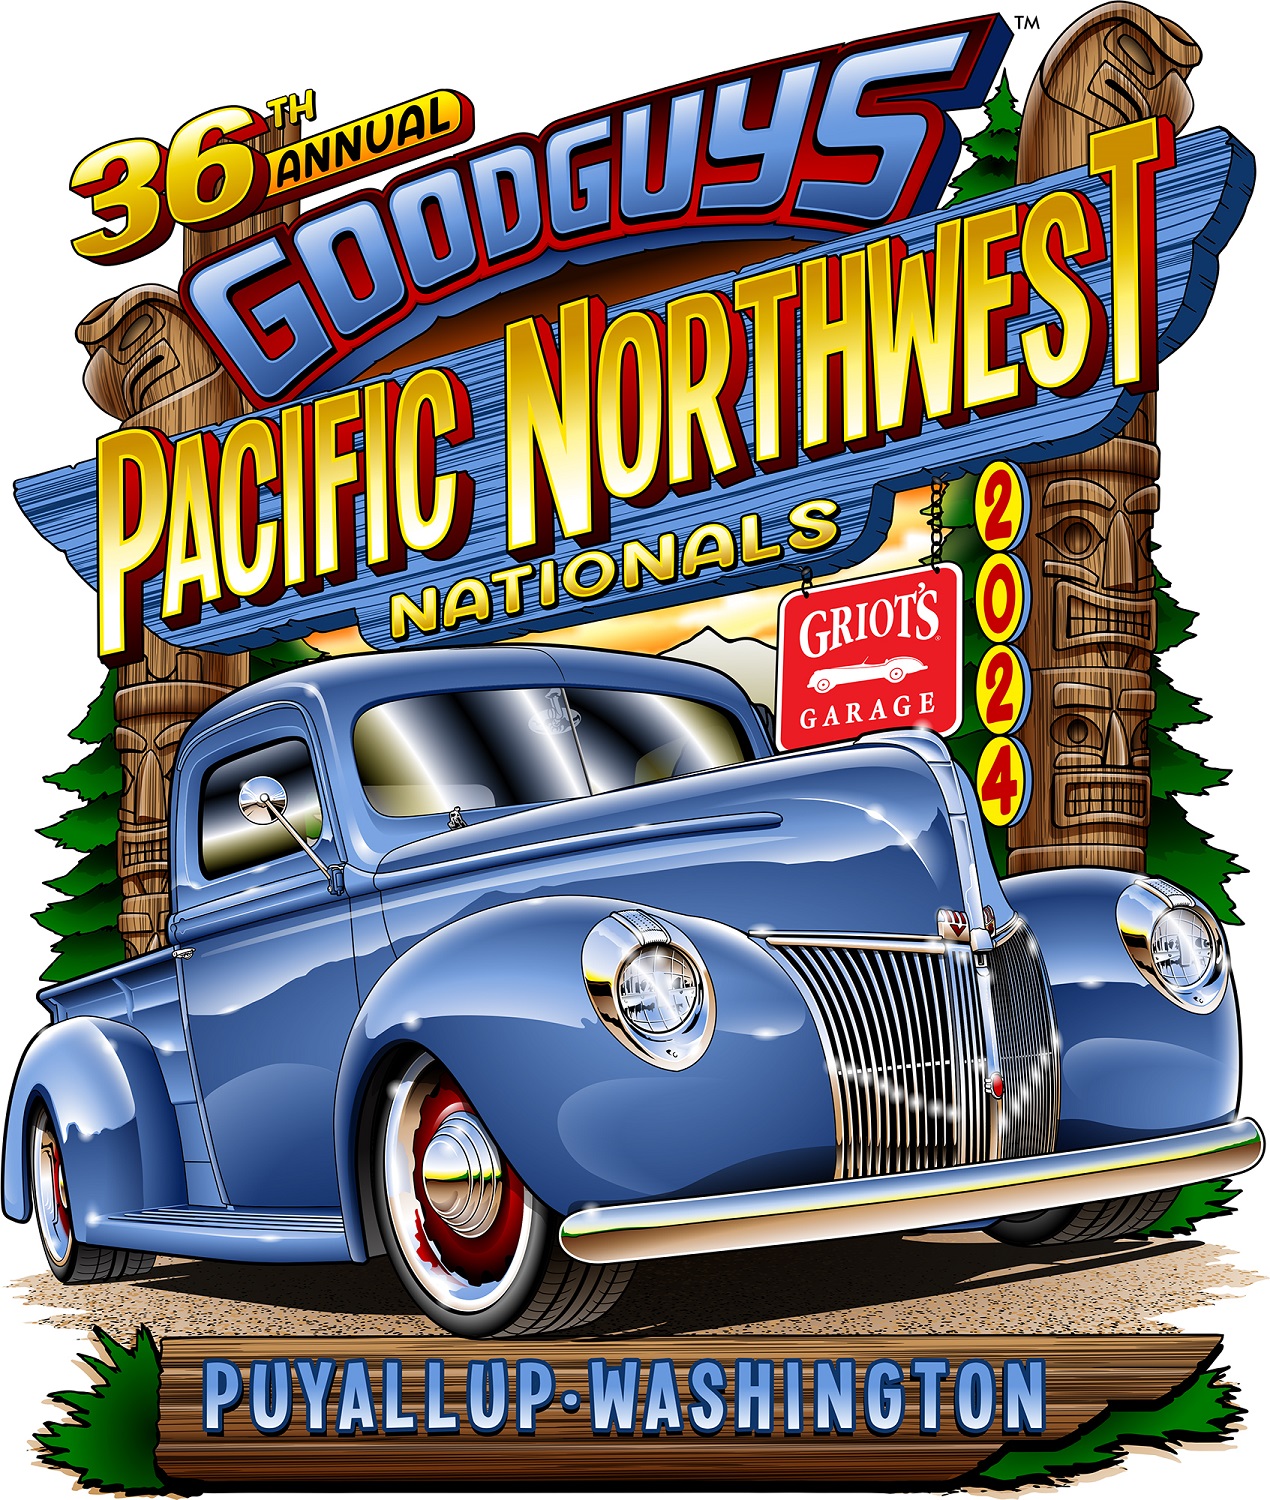 Goodguys Pacific Northwest Nationals